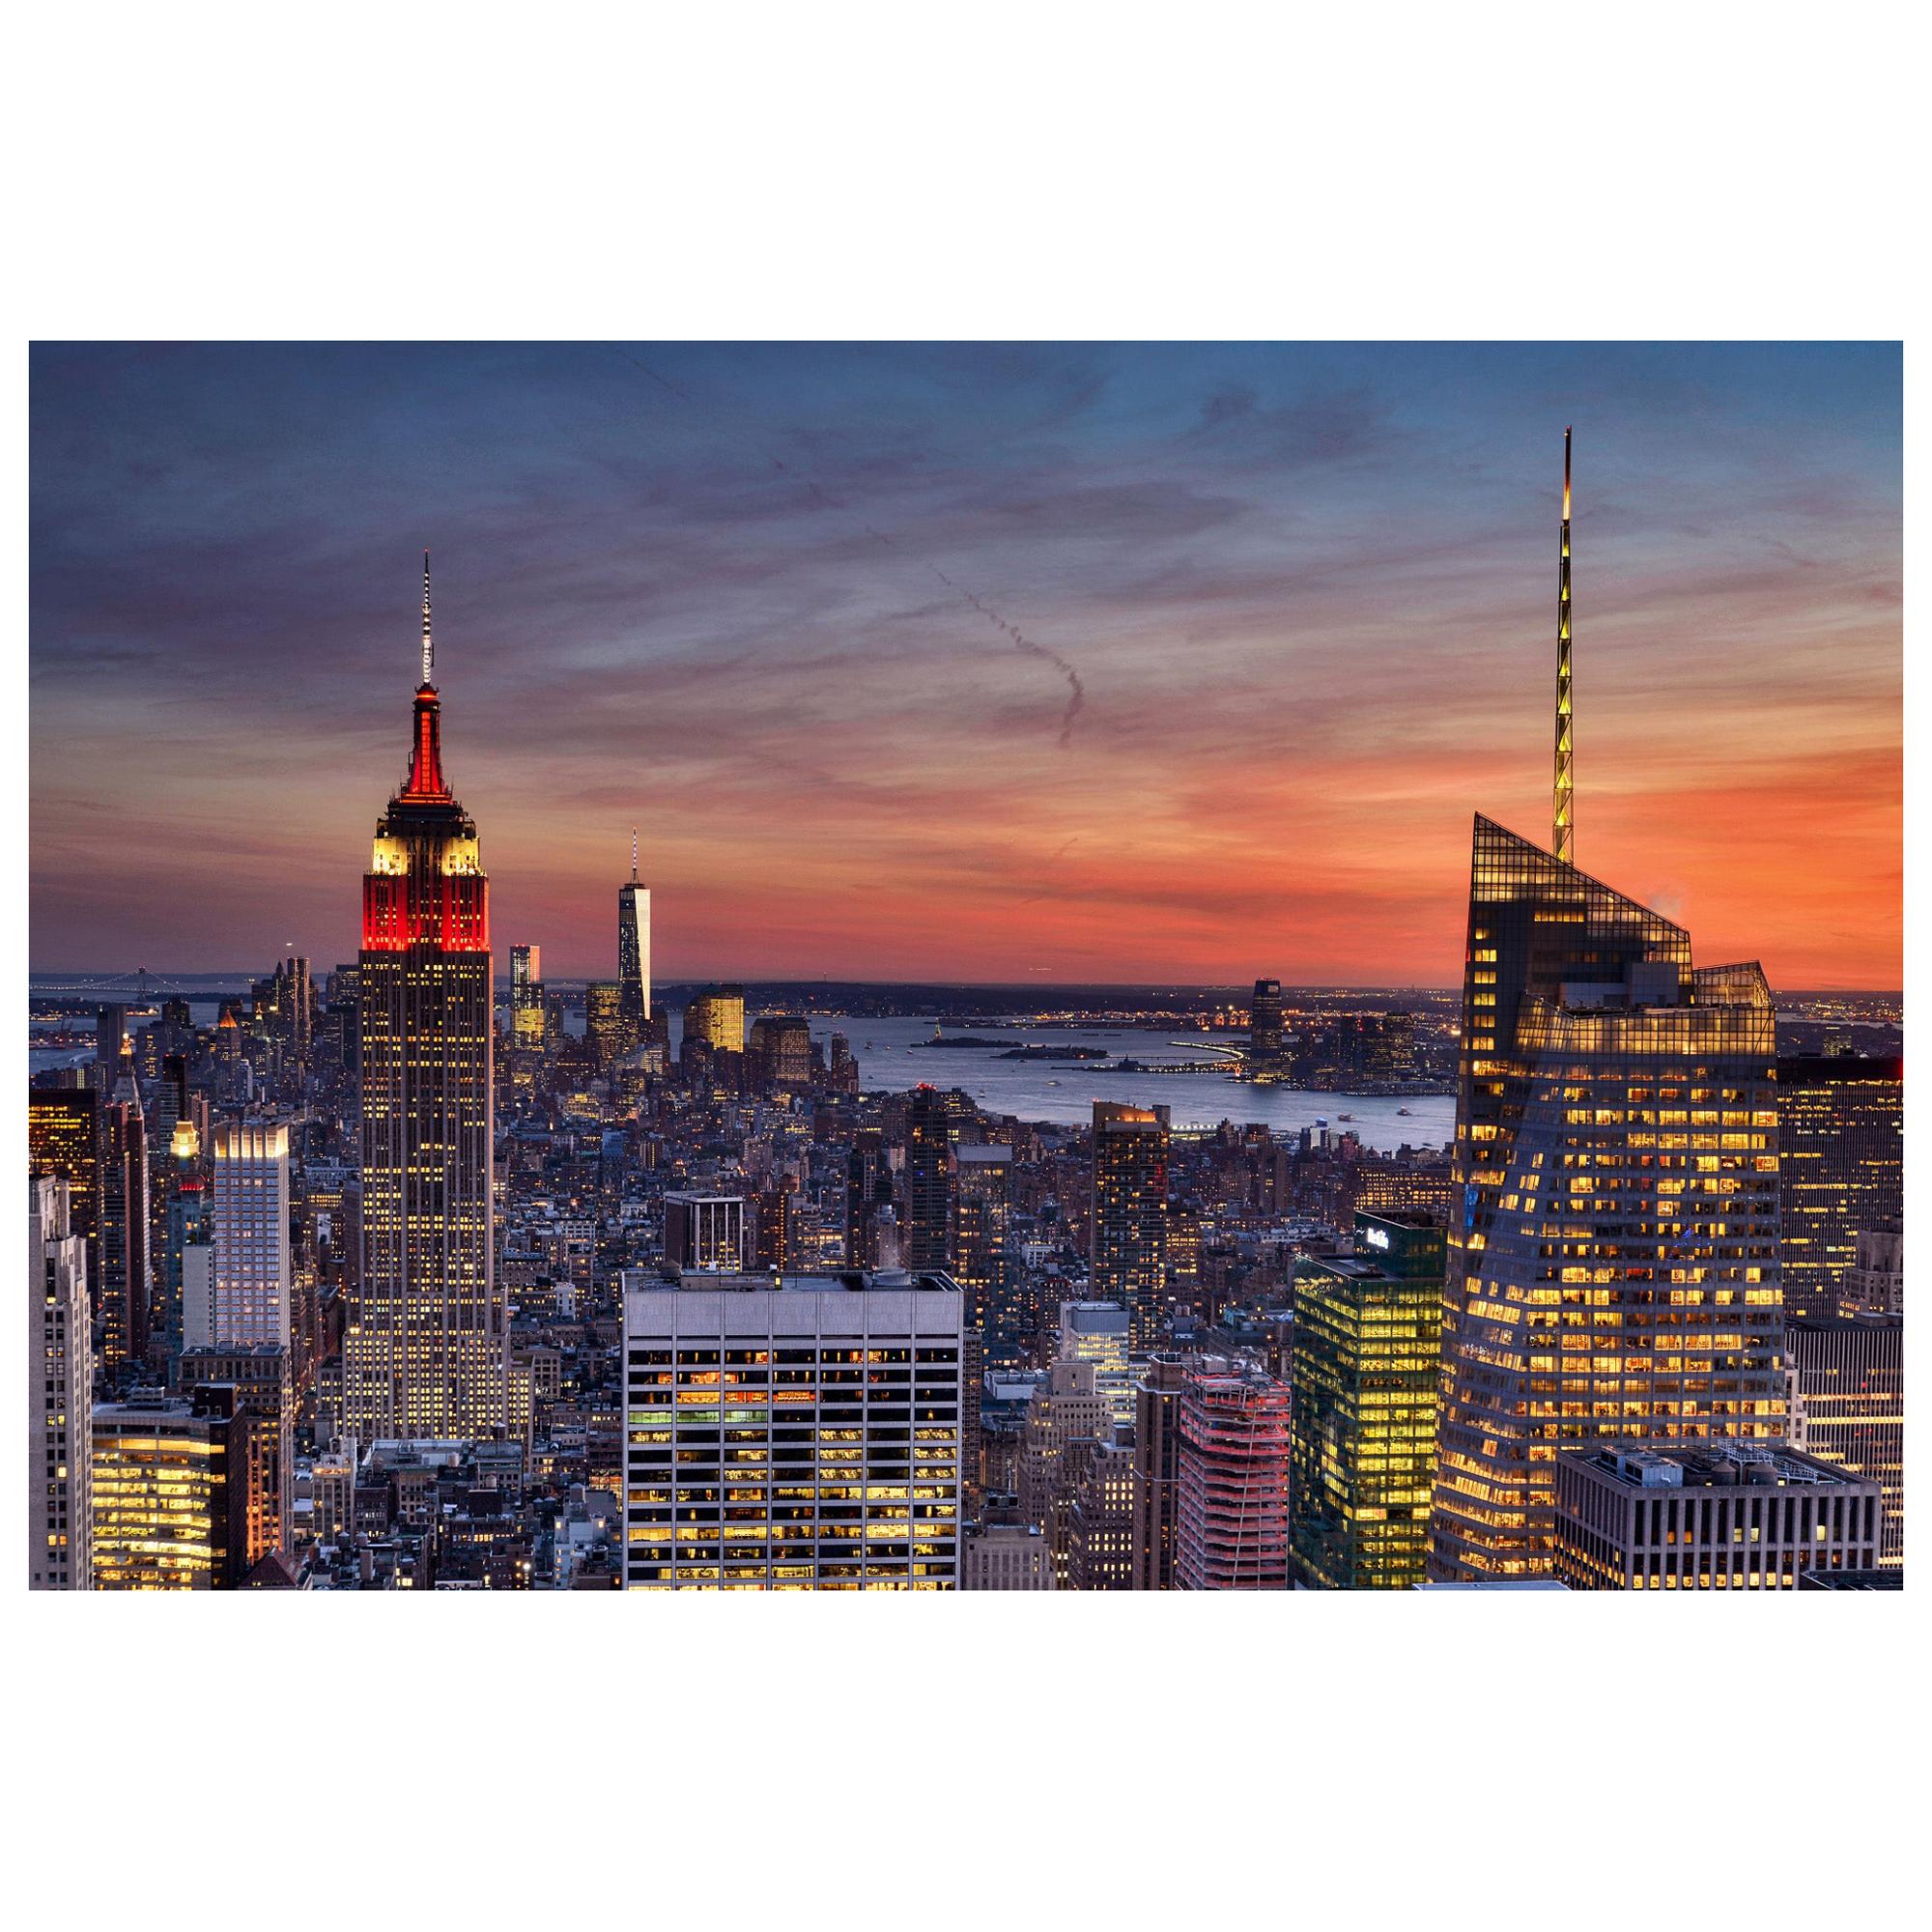 New York Manhattan Landscape, Color Photography Fine Art Print by Rainer Martini For Sale